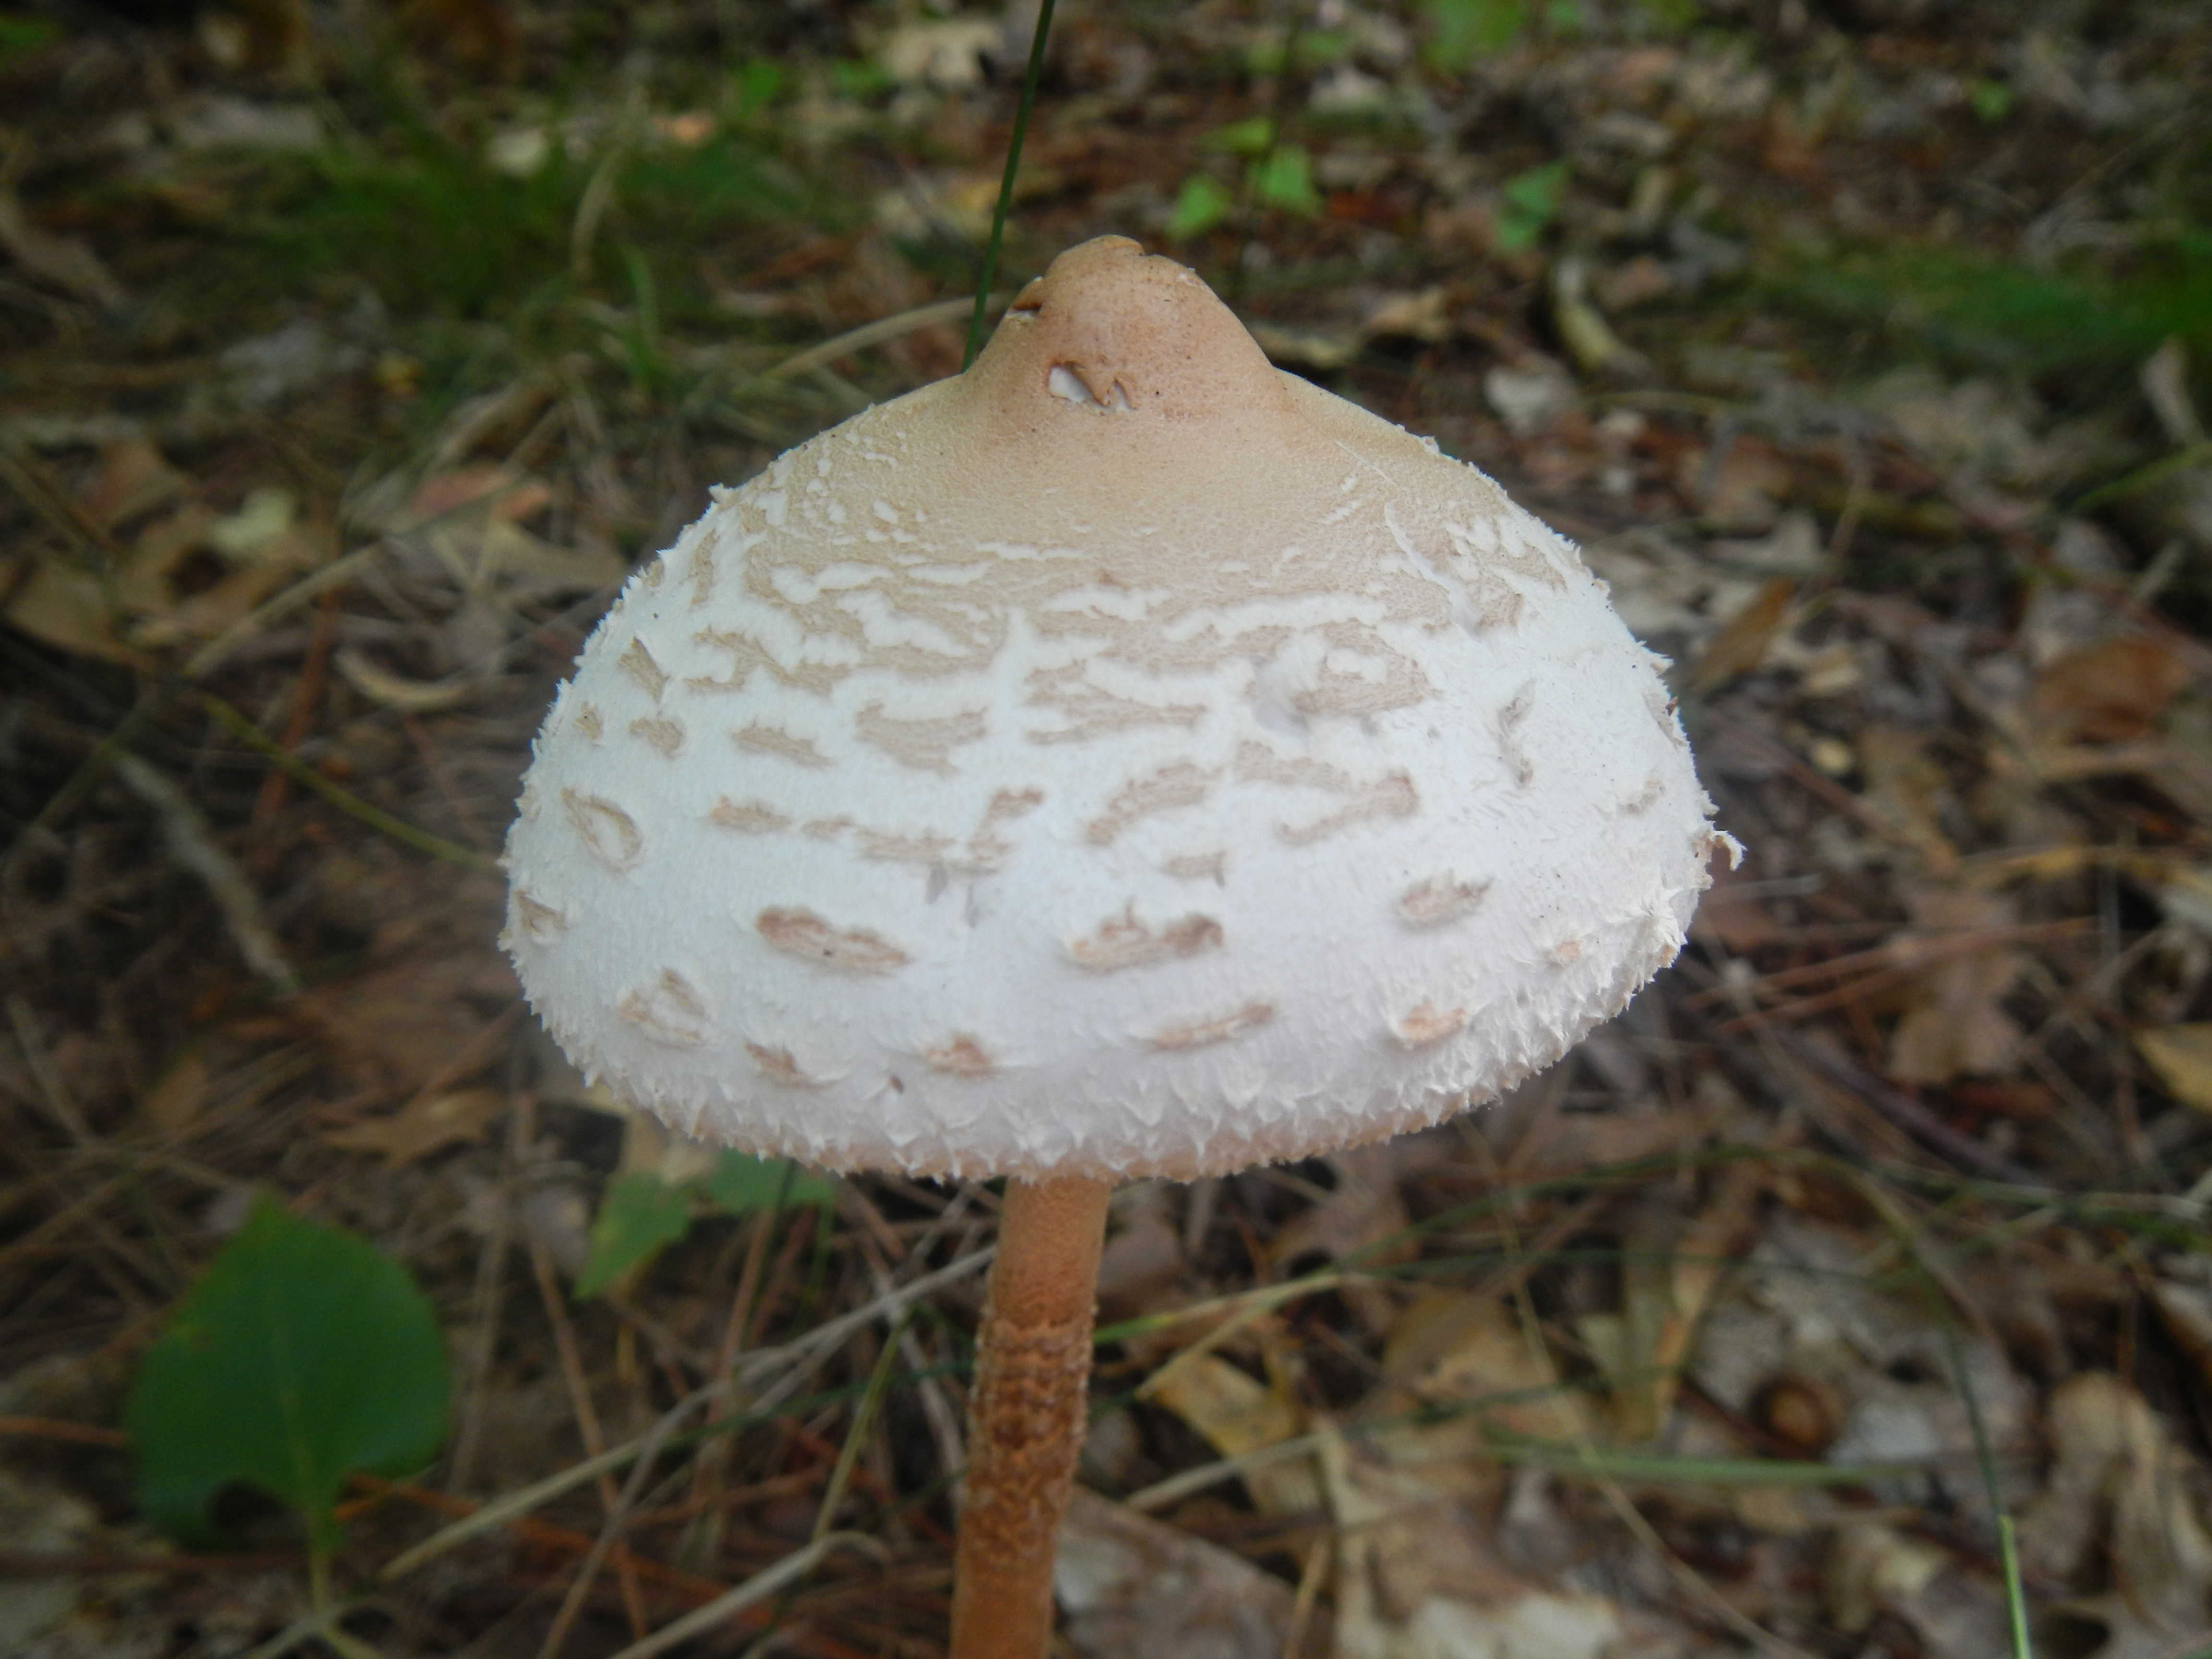 Lepiota procera, the Parasol Mushroom - this one is edible